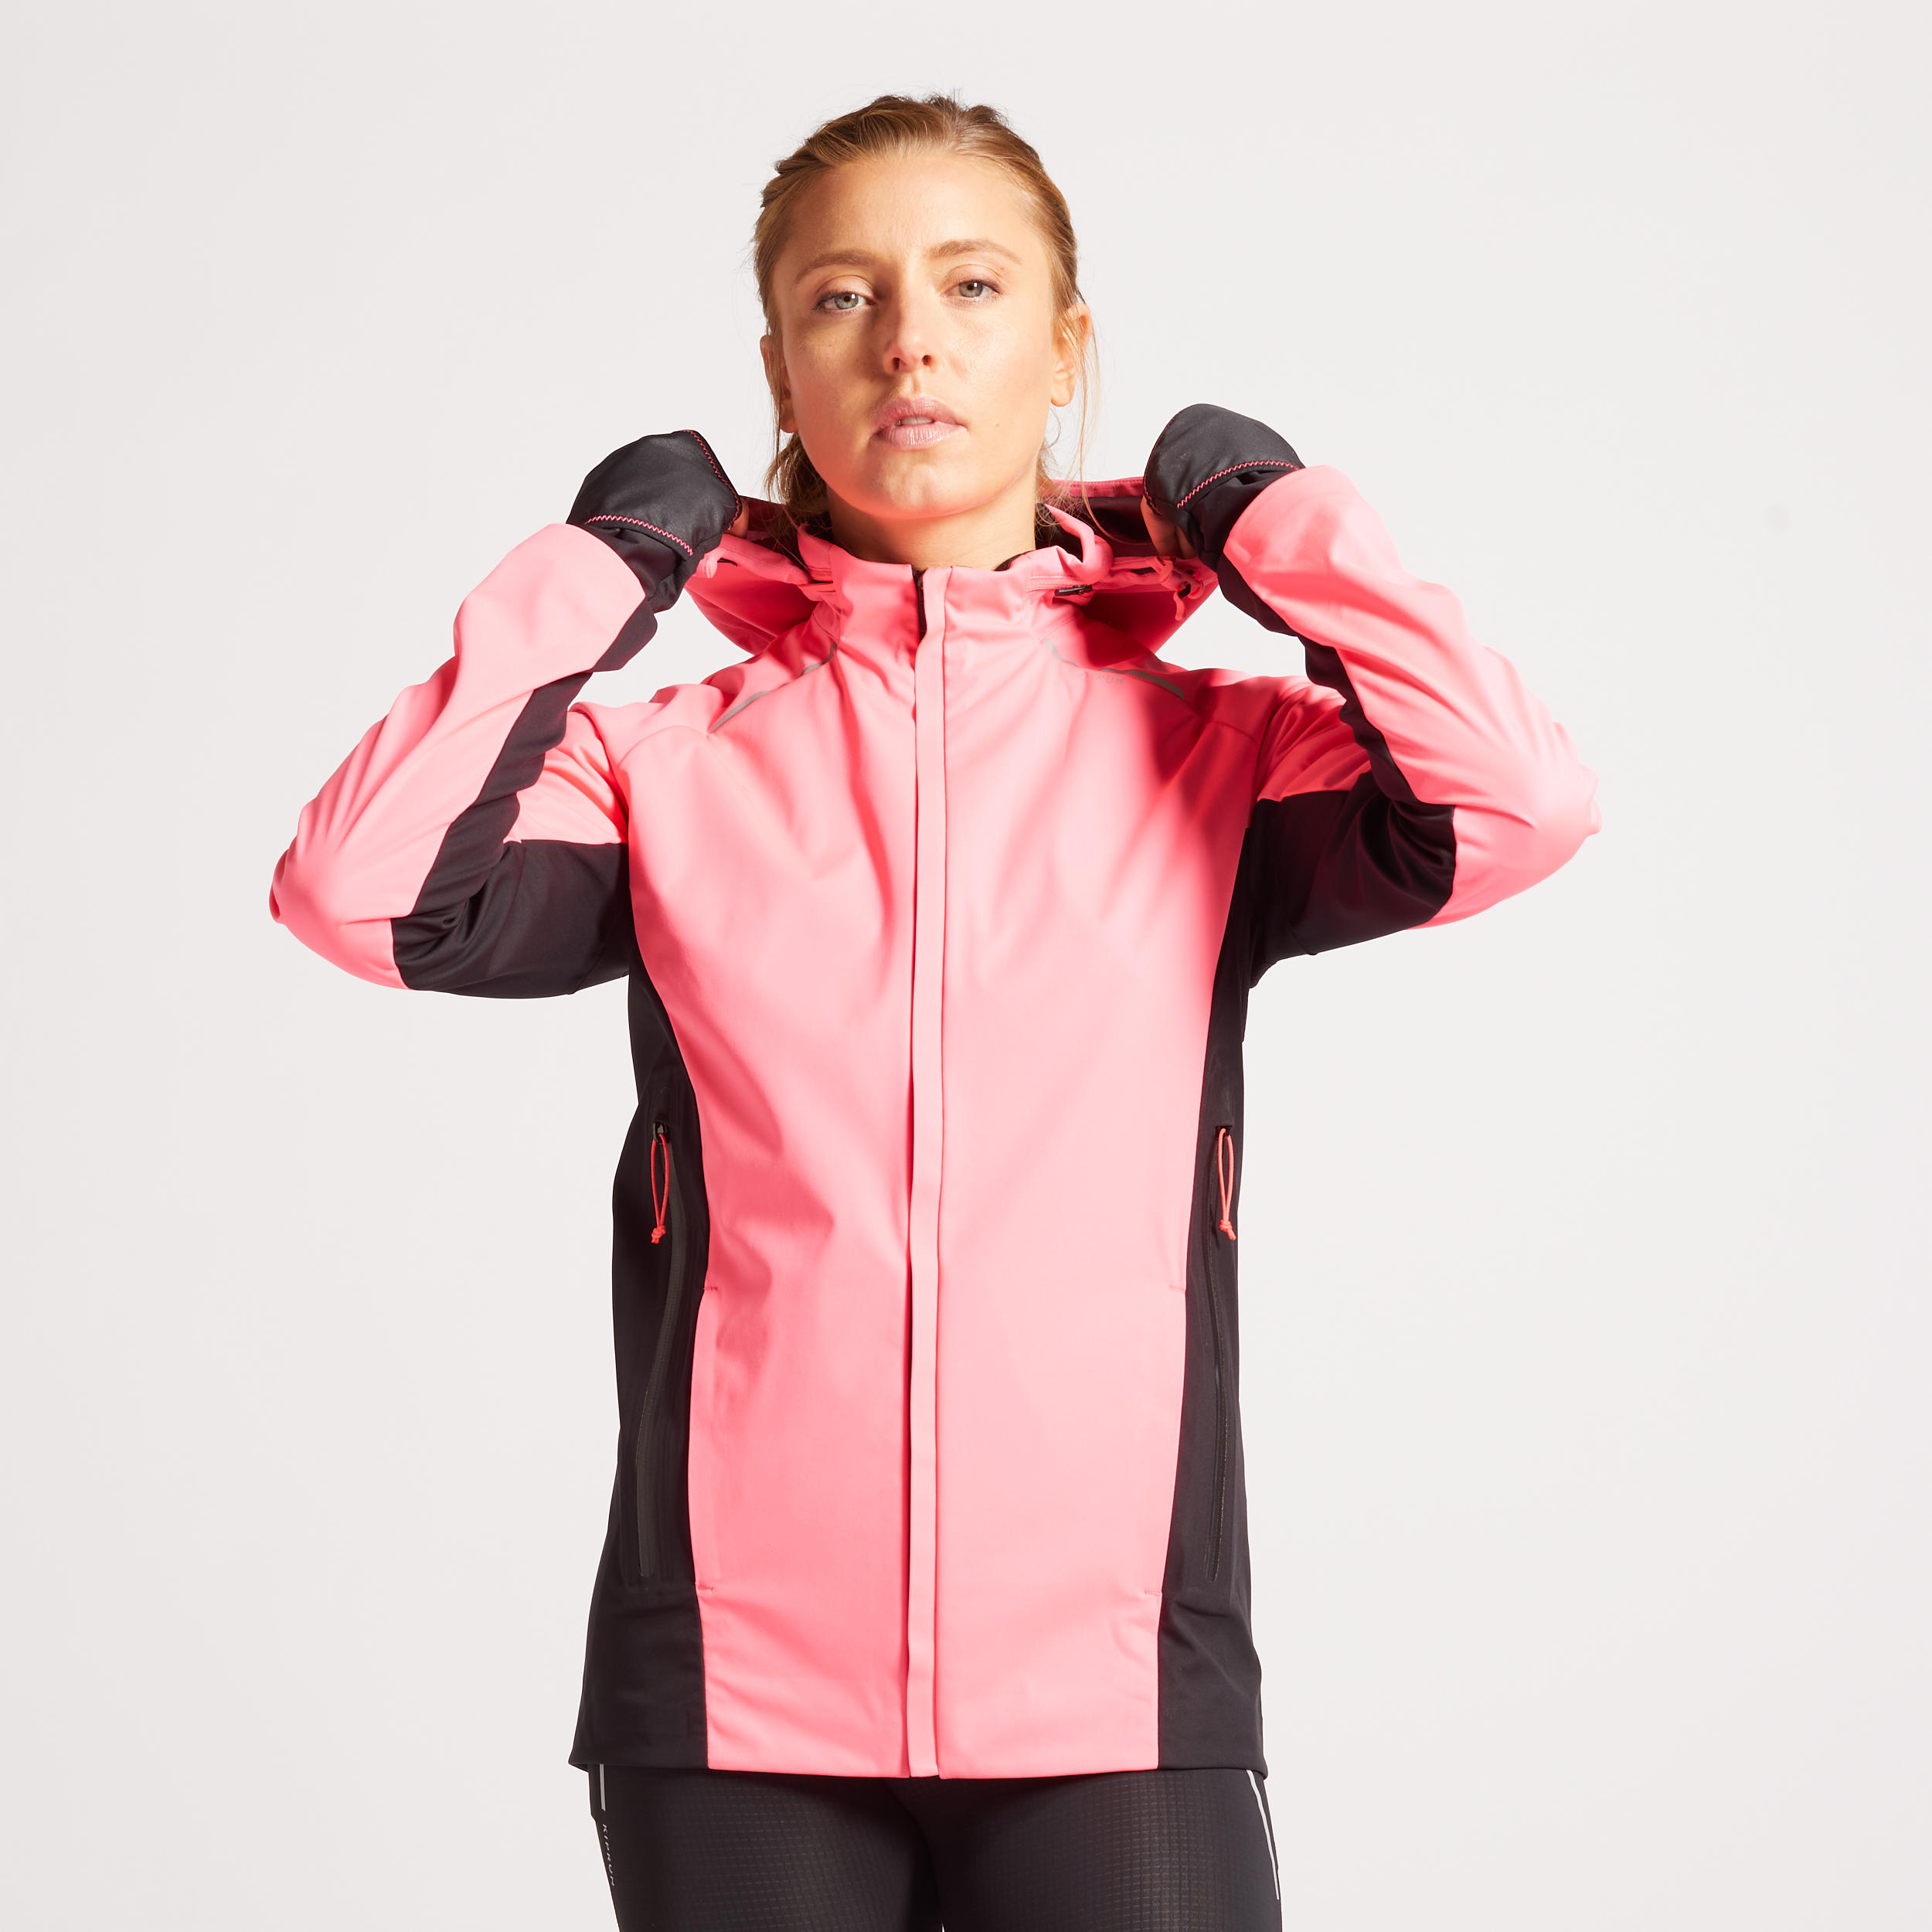 decathlon women's running jacket